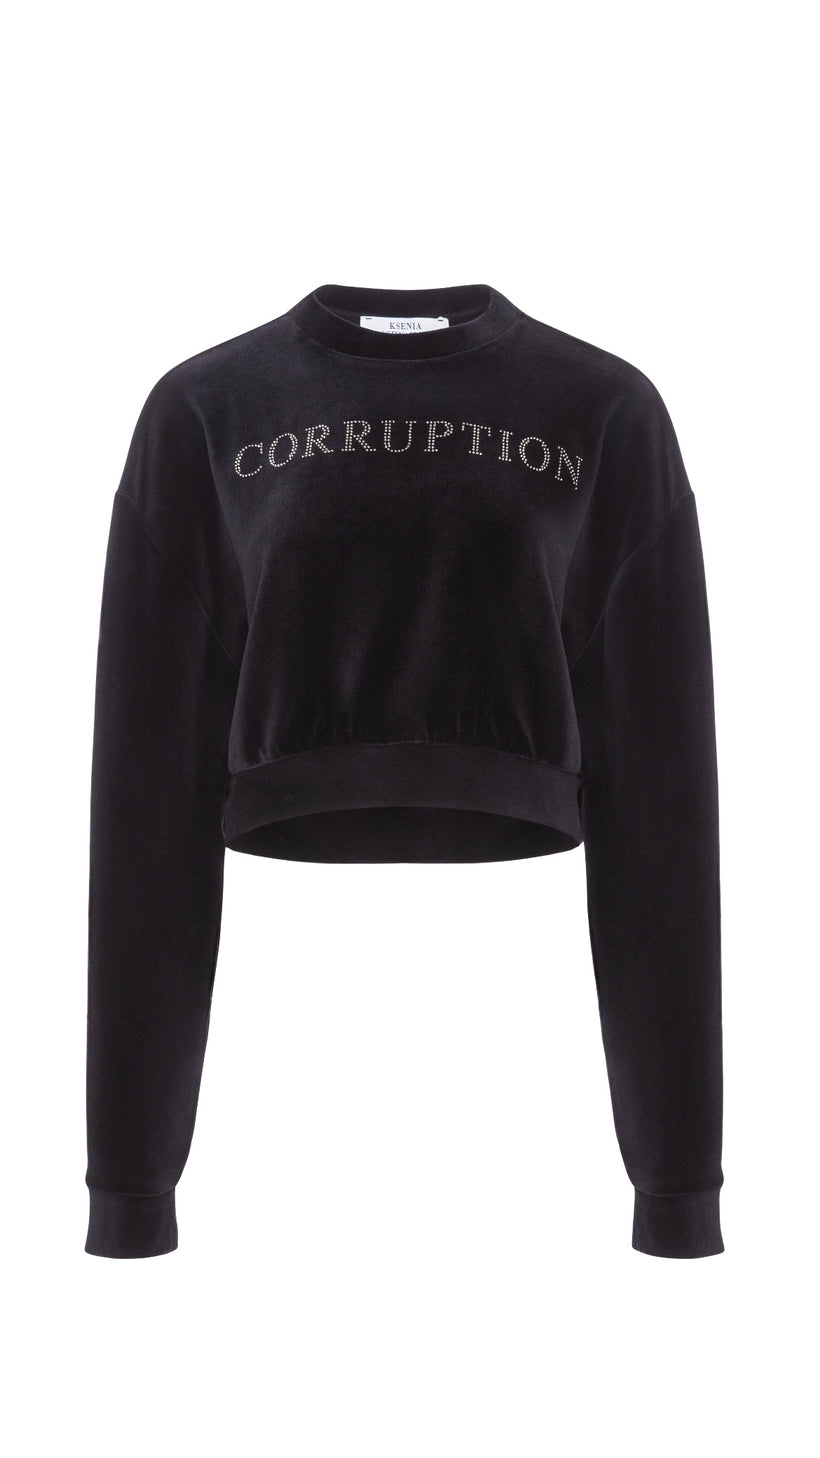 Velour Corruption Sweatshirt image